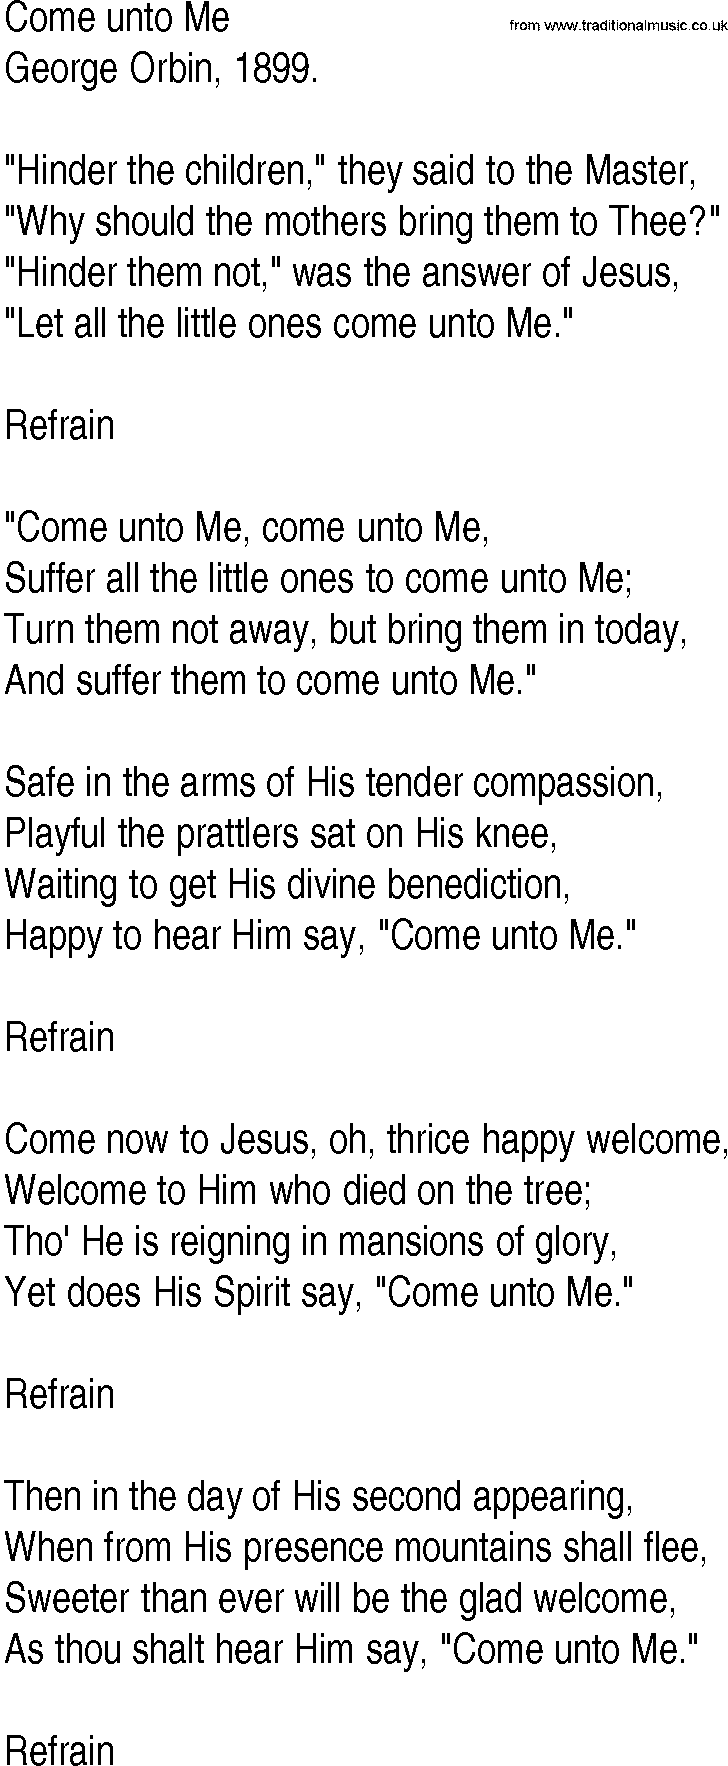 Hymn and Gospel Song: Come unto Me by George Orbin lyrics